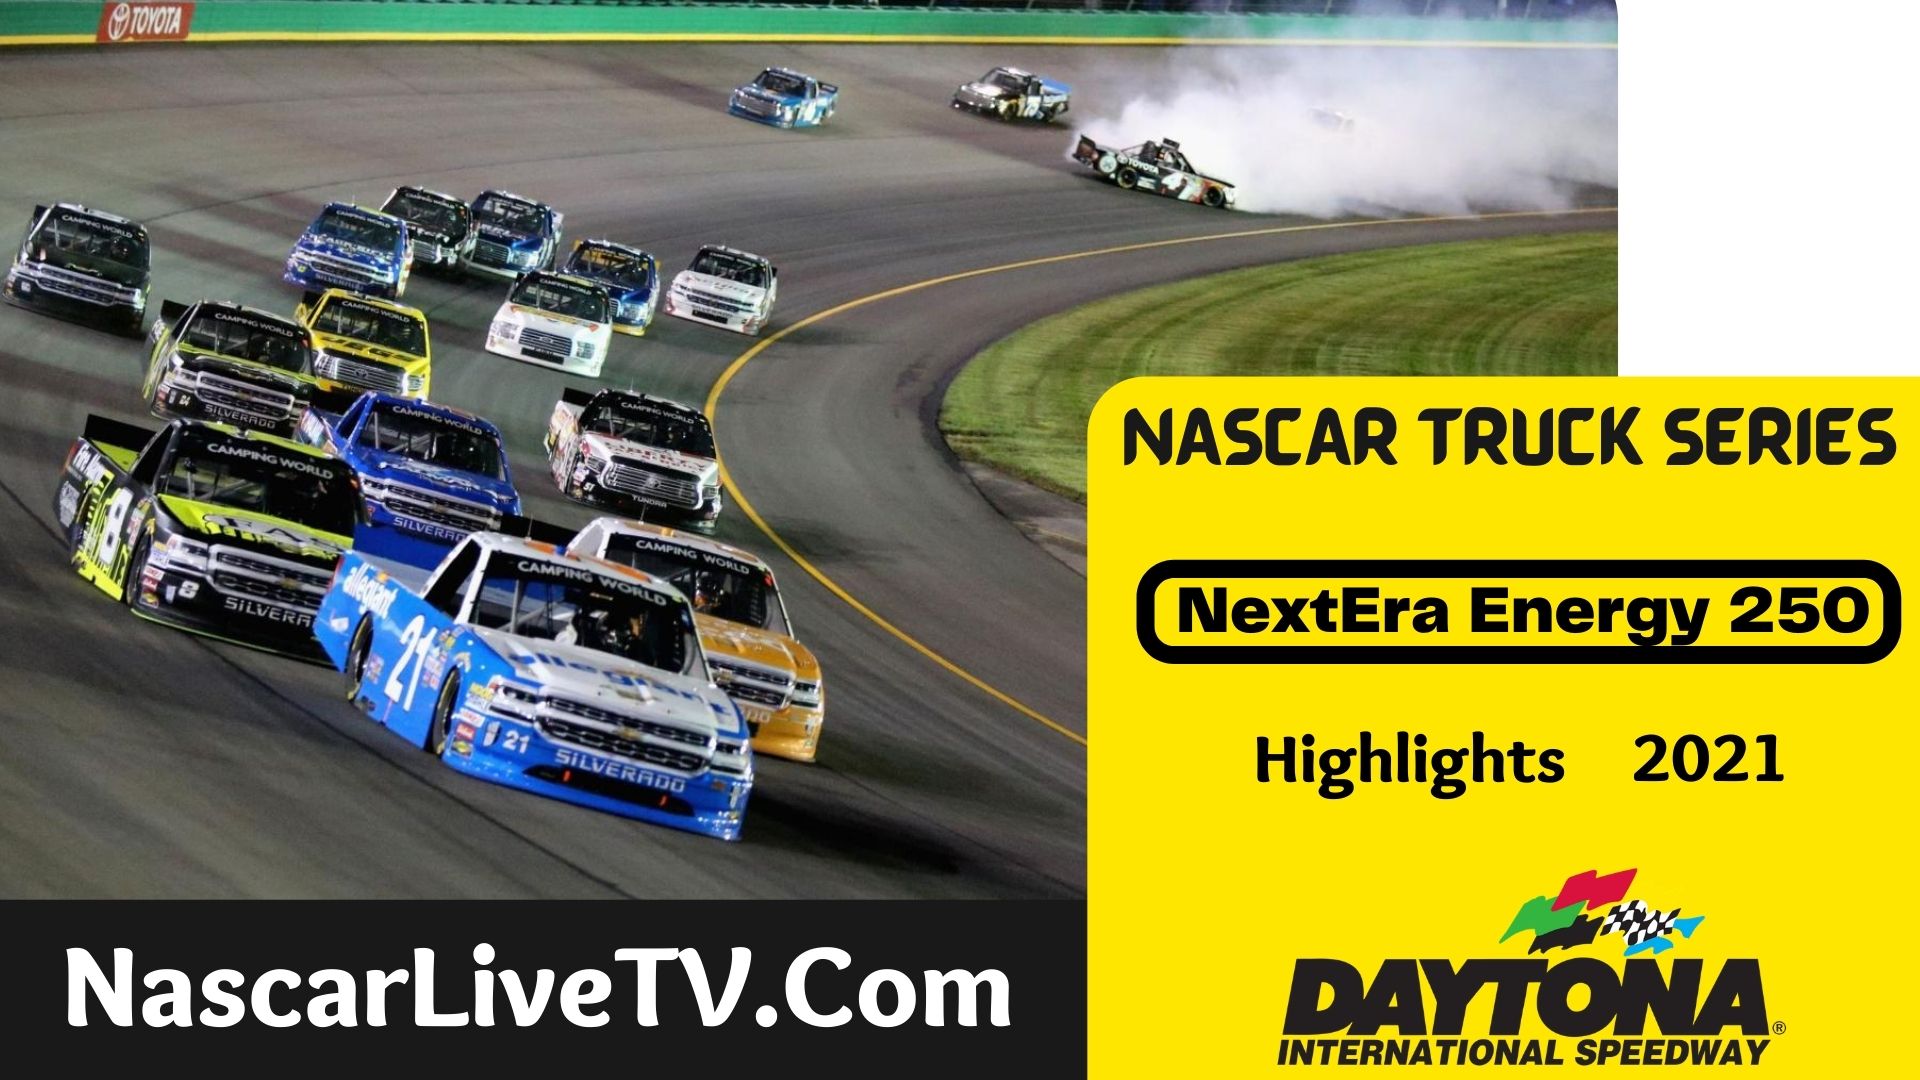 NextEra Energy 250 NASCAR Truck Series Highlights 2021